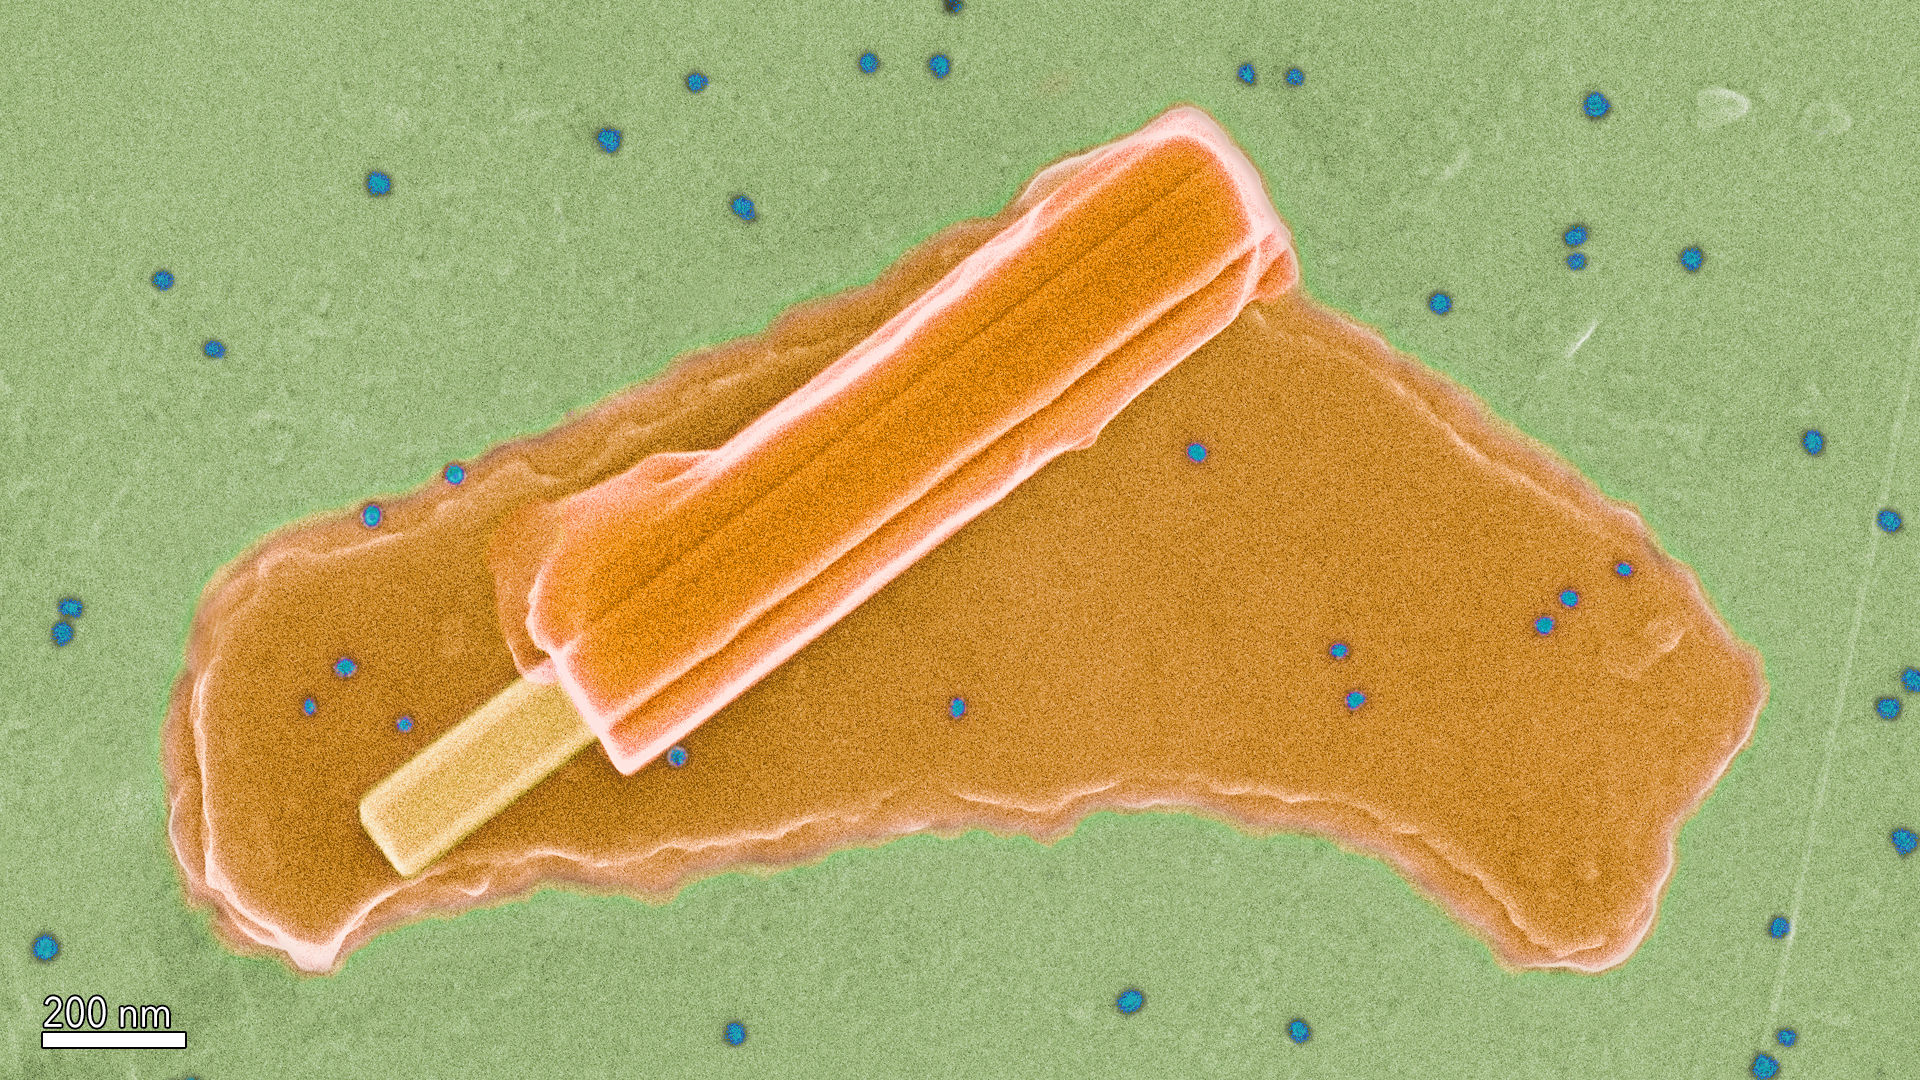 A Summer Snack for NanoAnts